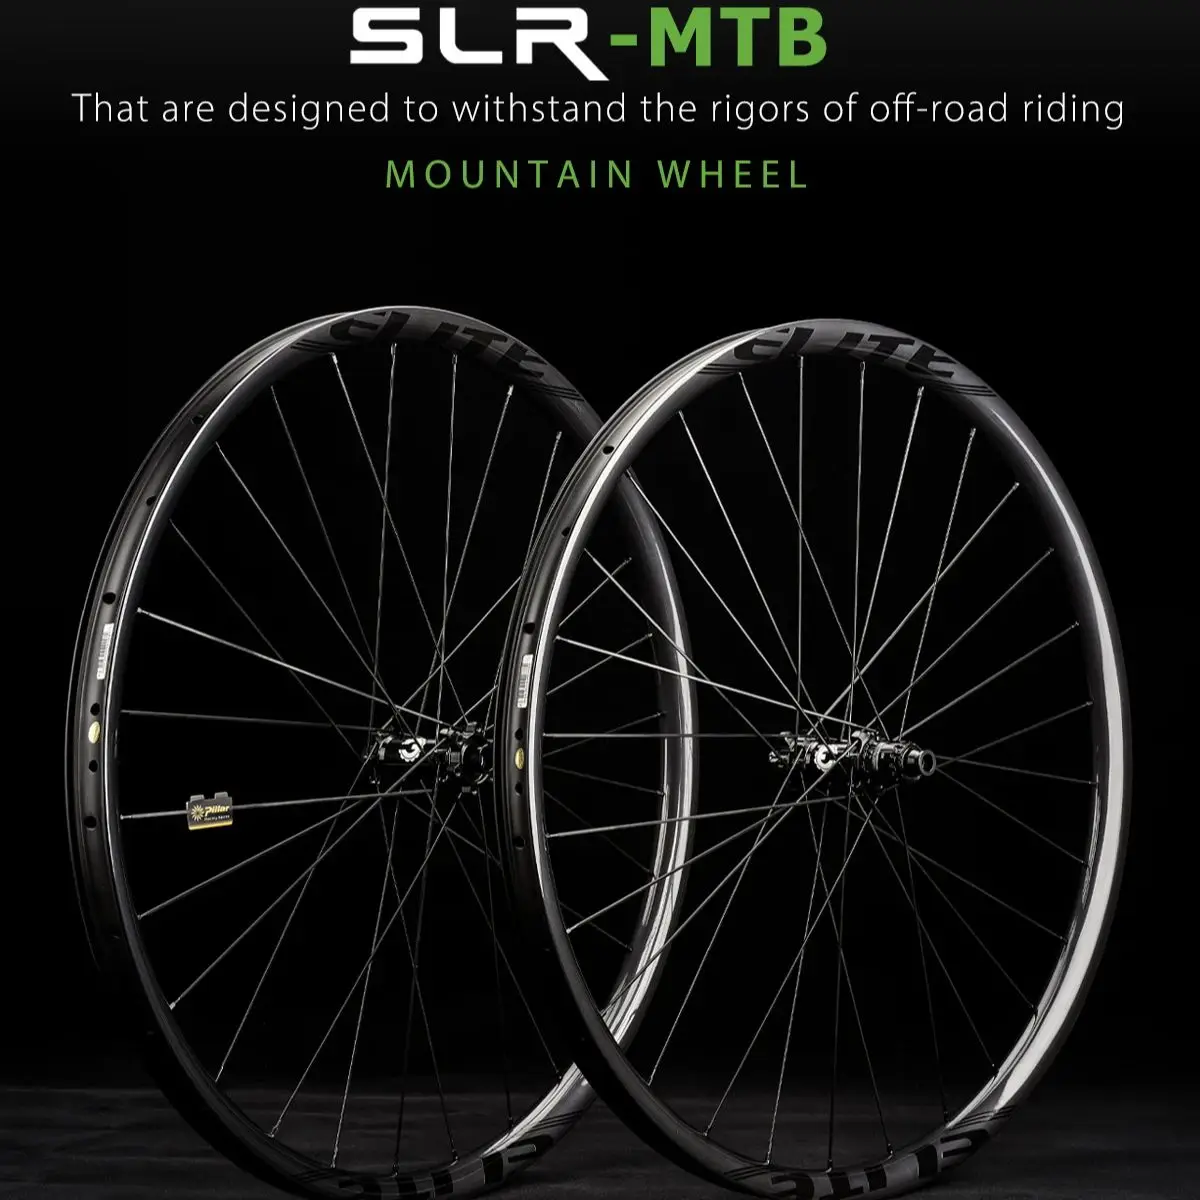 

ELITEWHEELS SLR MTB Carbon Wheelset 29er XC AM 33x29mm Rims Ratchet System 36T MS HG XD Hub For Cross Country All Mountain Bike